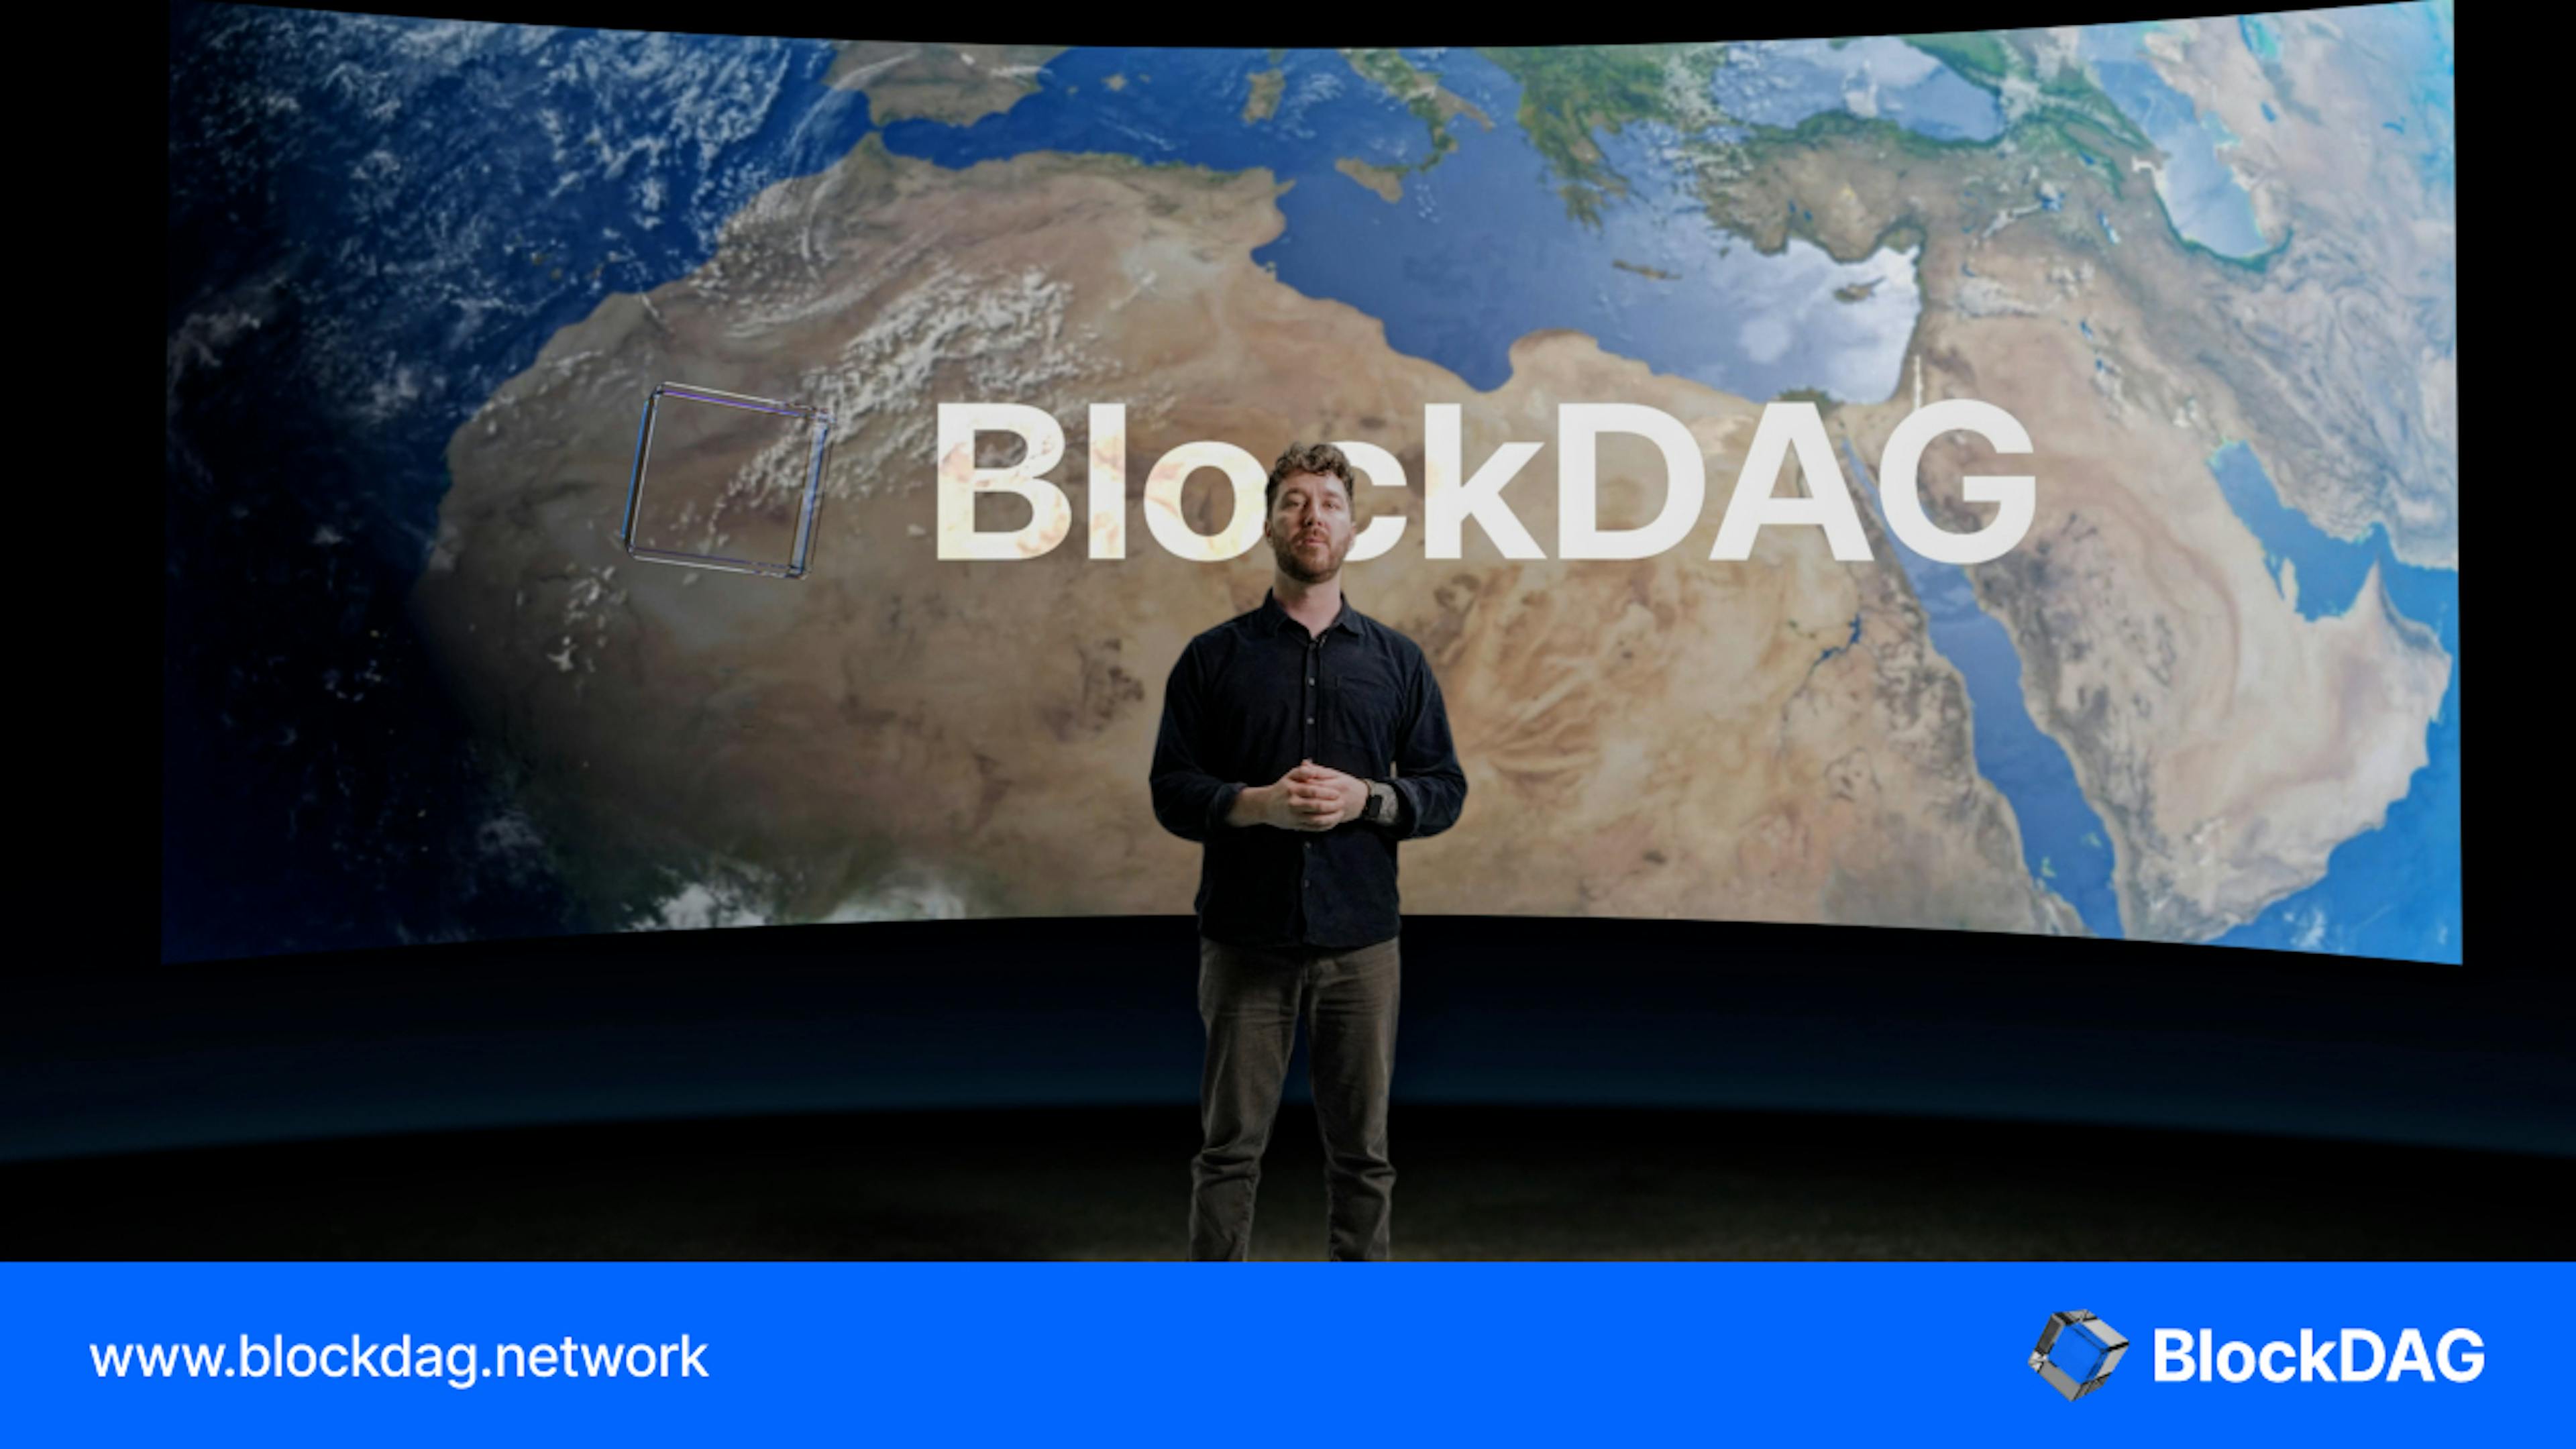 /ja/blockdagネットワークが、暗号通貨プロジェクトへの取り組み方を変えるグローバル基調講演ビデオを公開 feature image